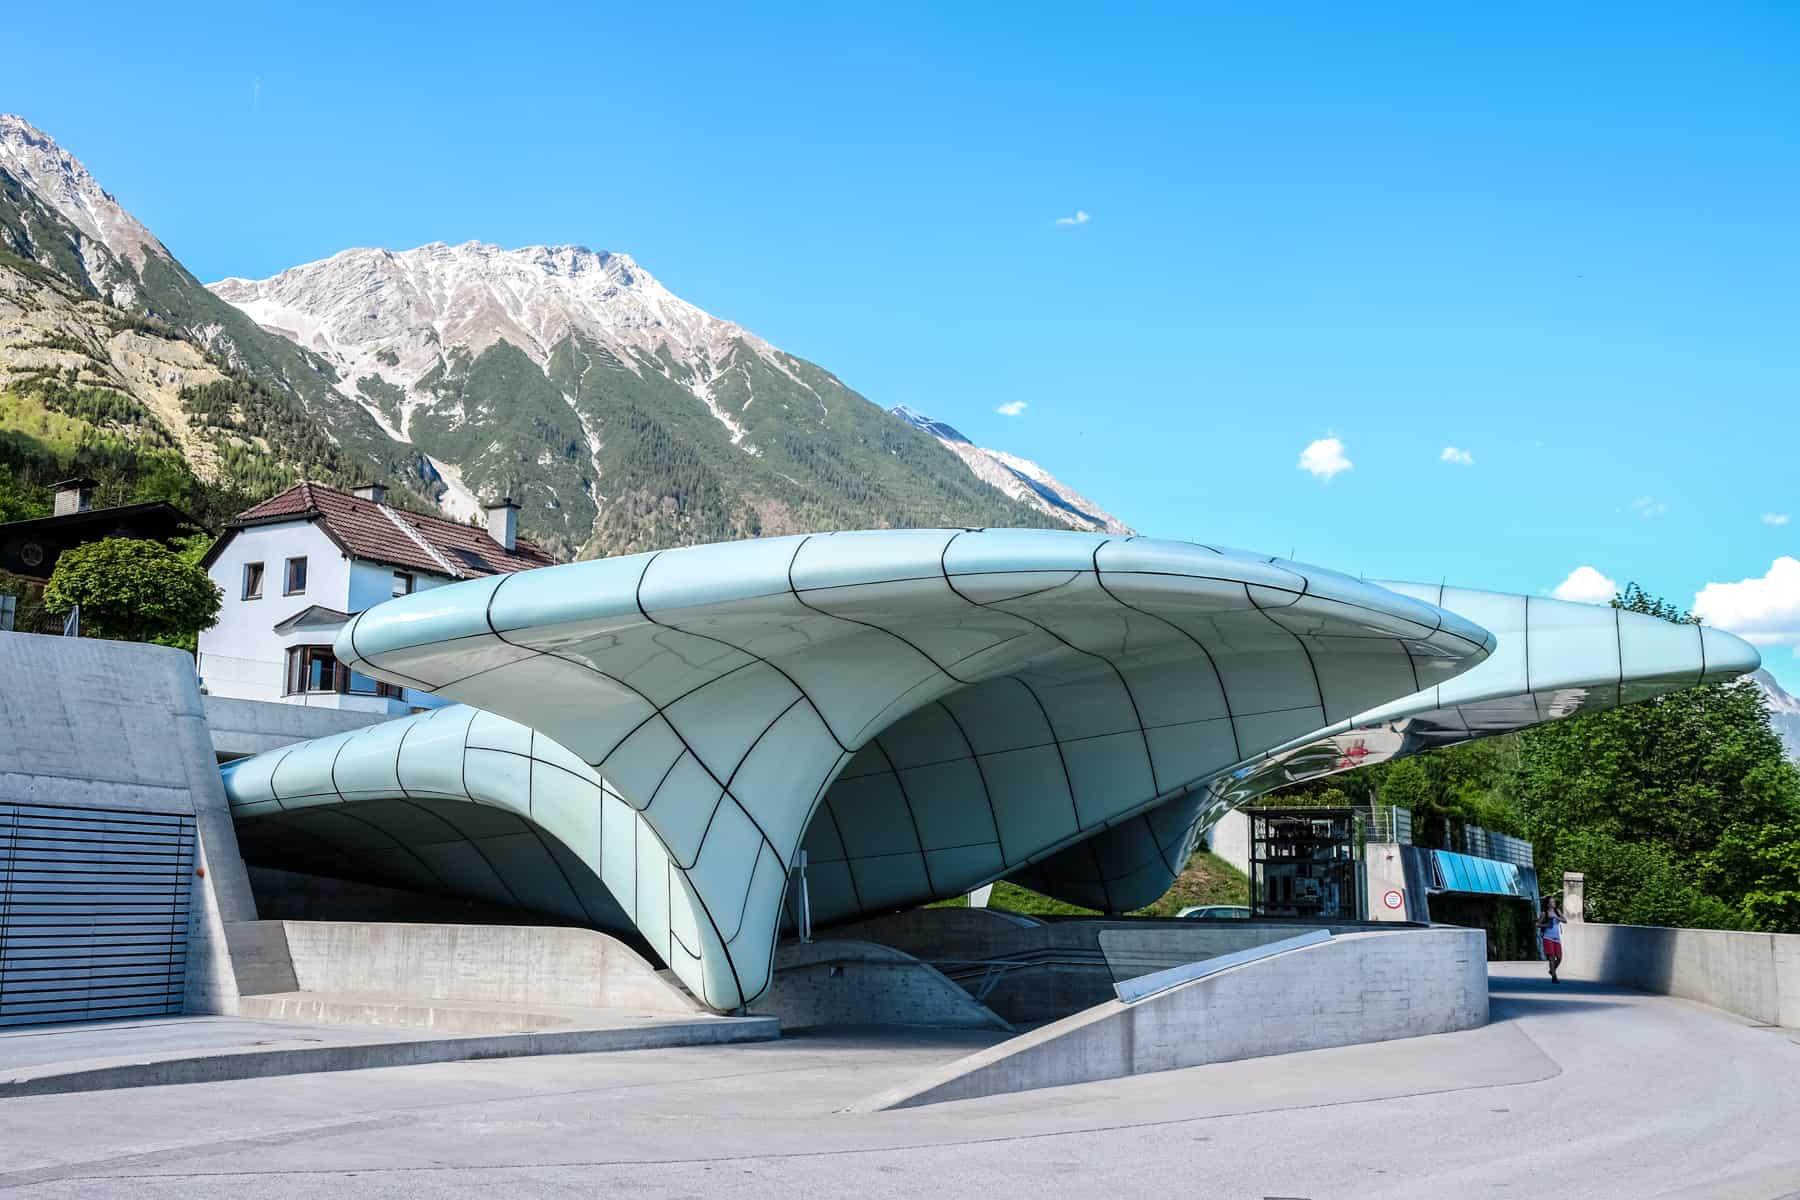 Avant-garde modern design of one of the three main Nordkettenbahnen cable car stations in Innsbruck, Austria